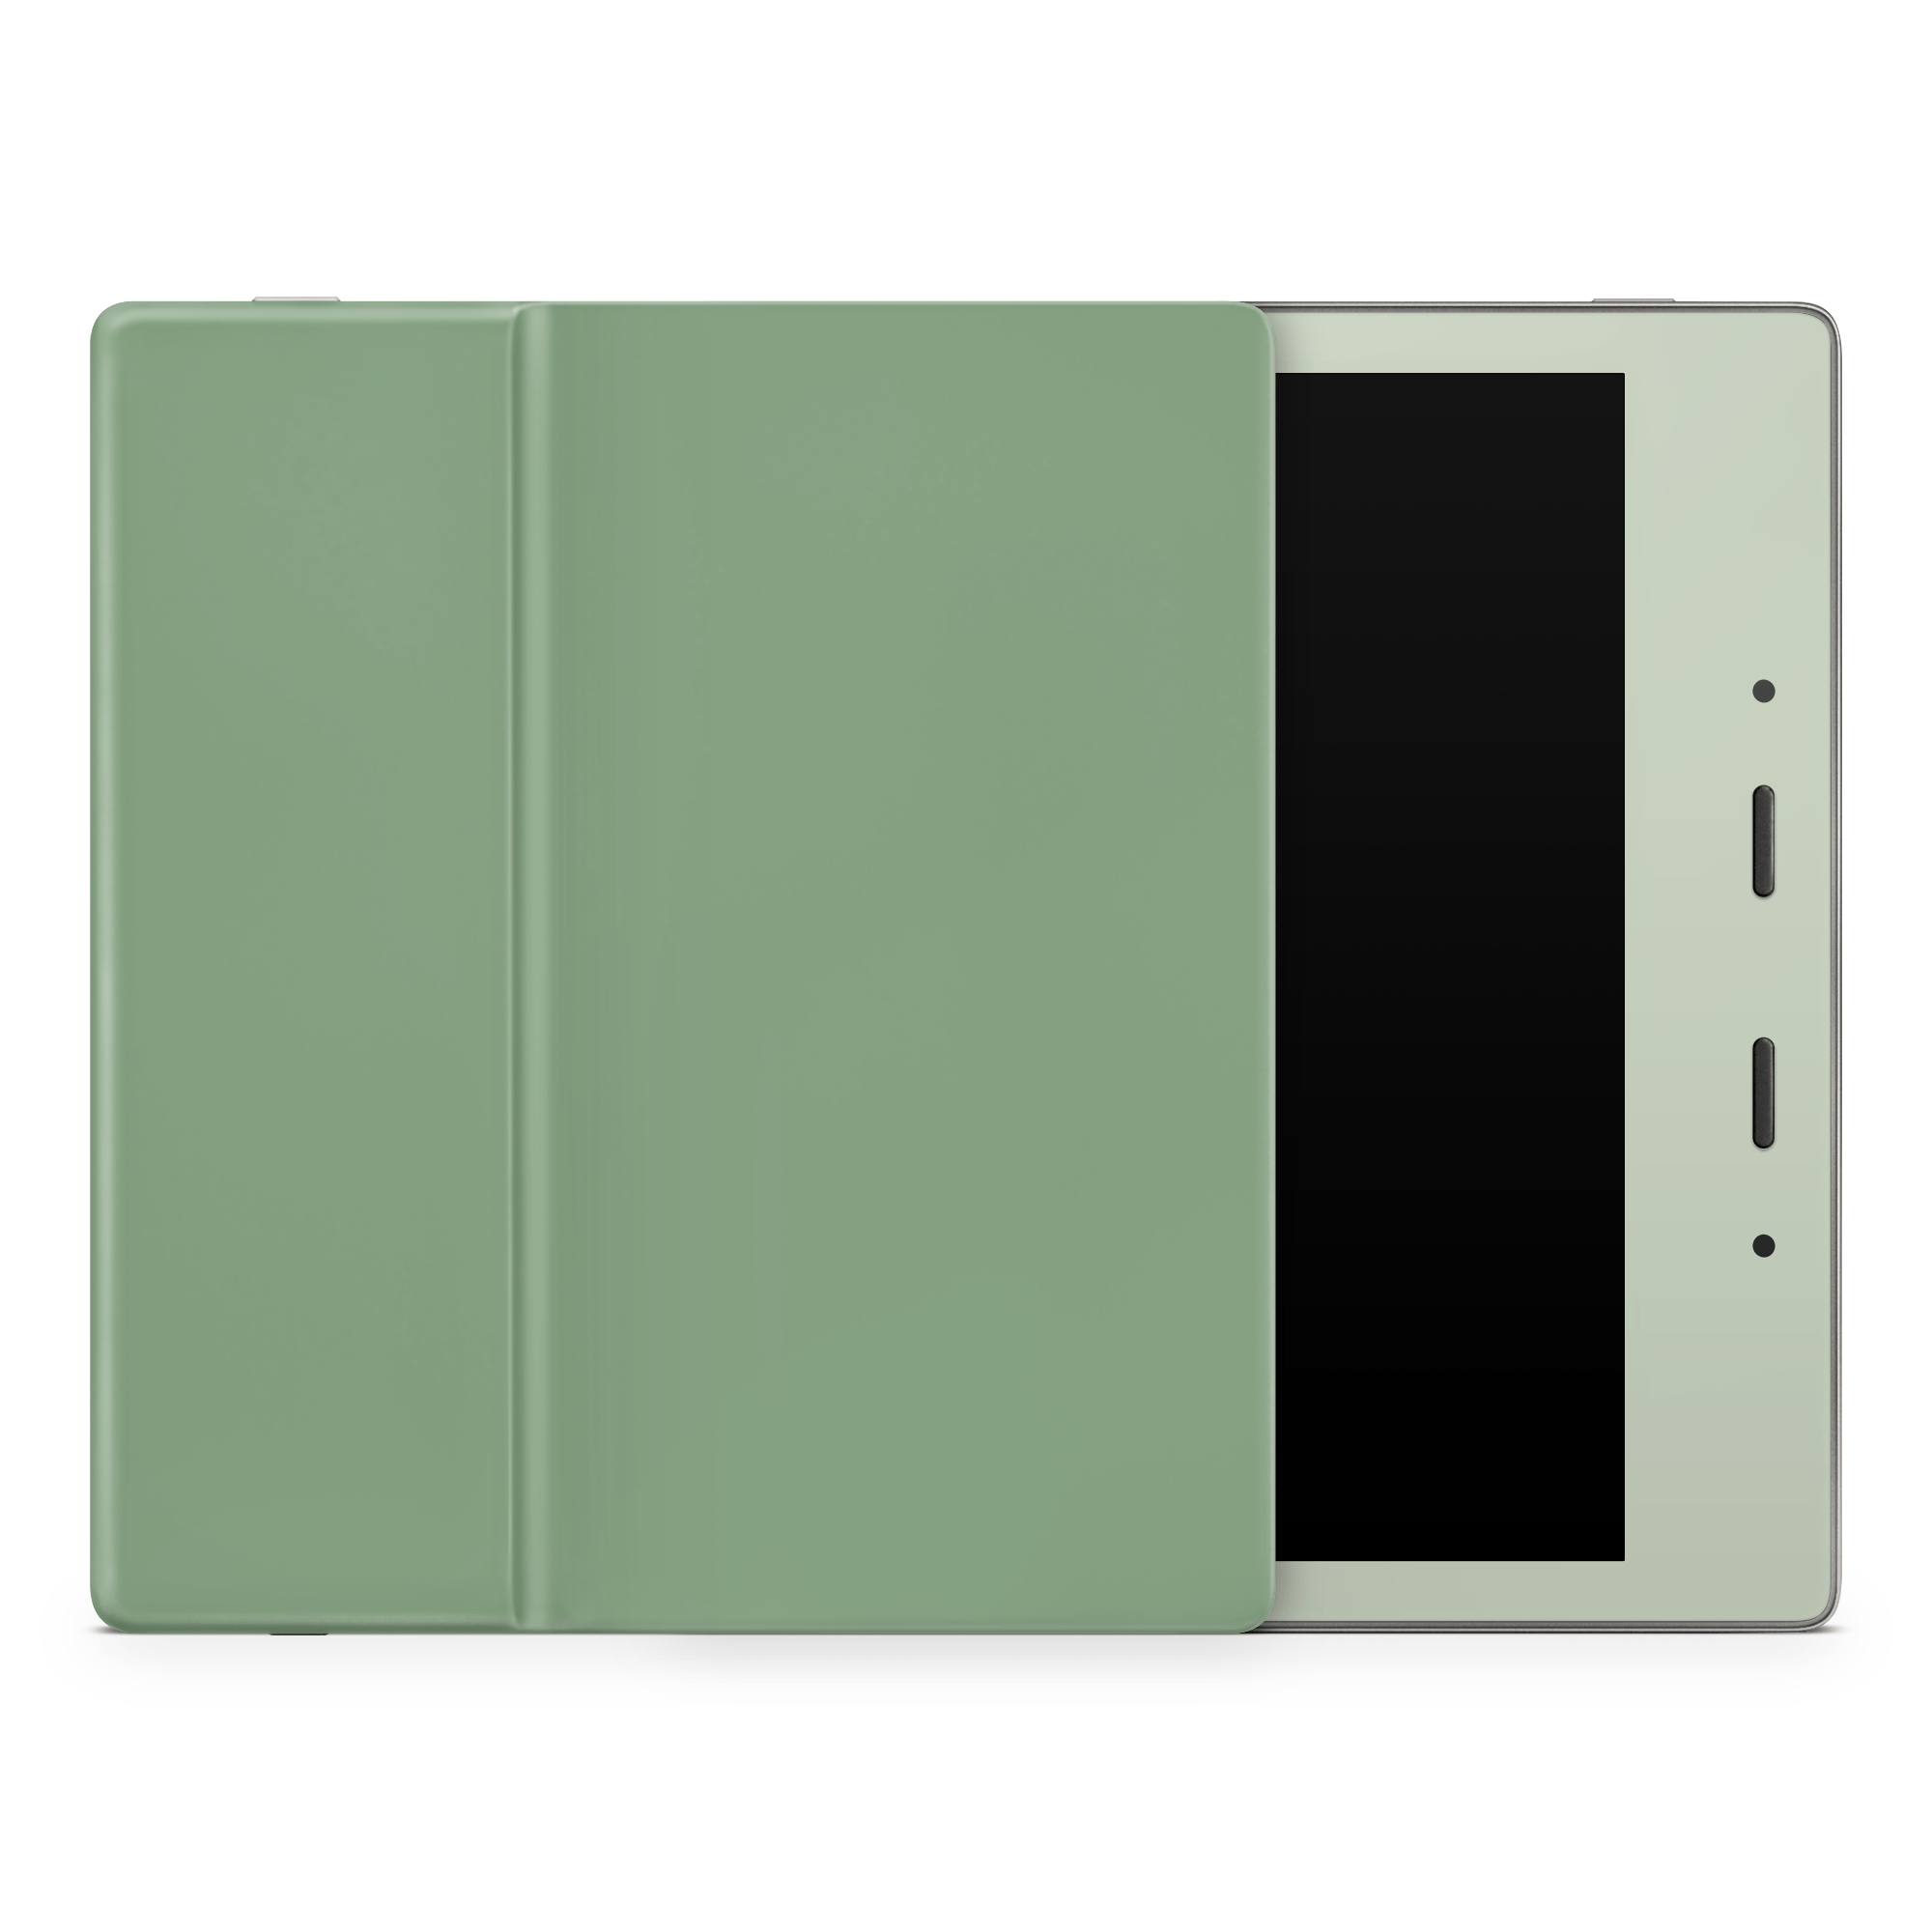 Timberland Green Amazon Kindle Skins